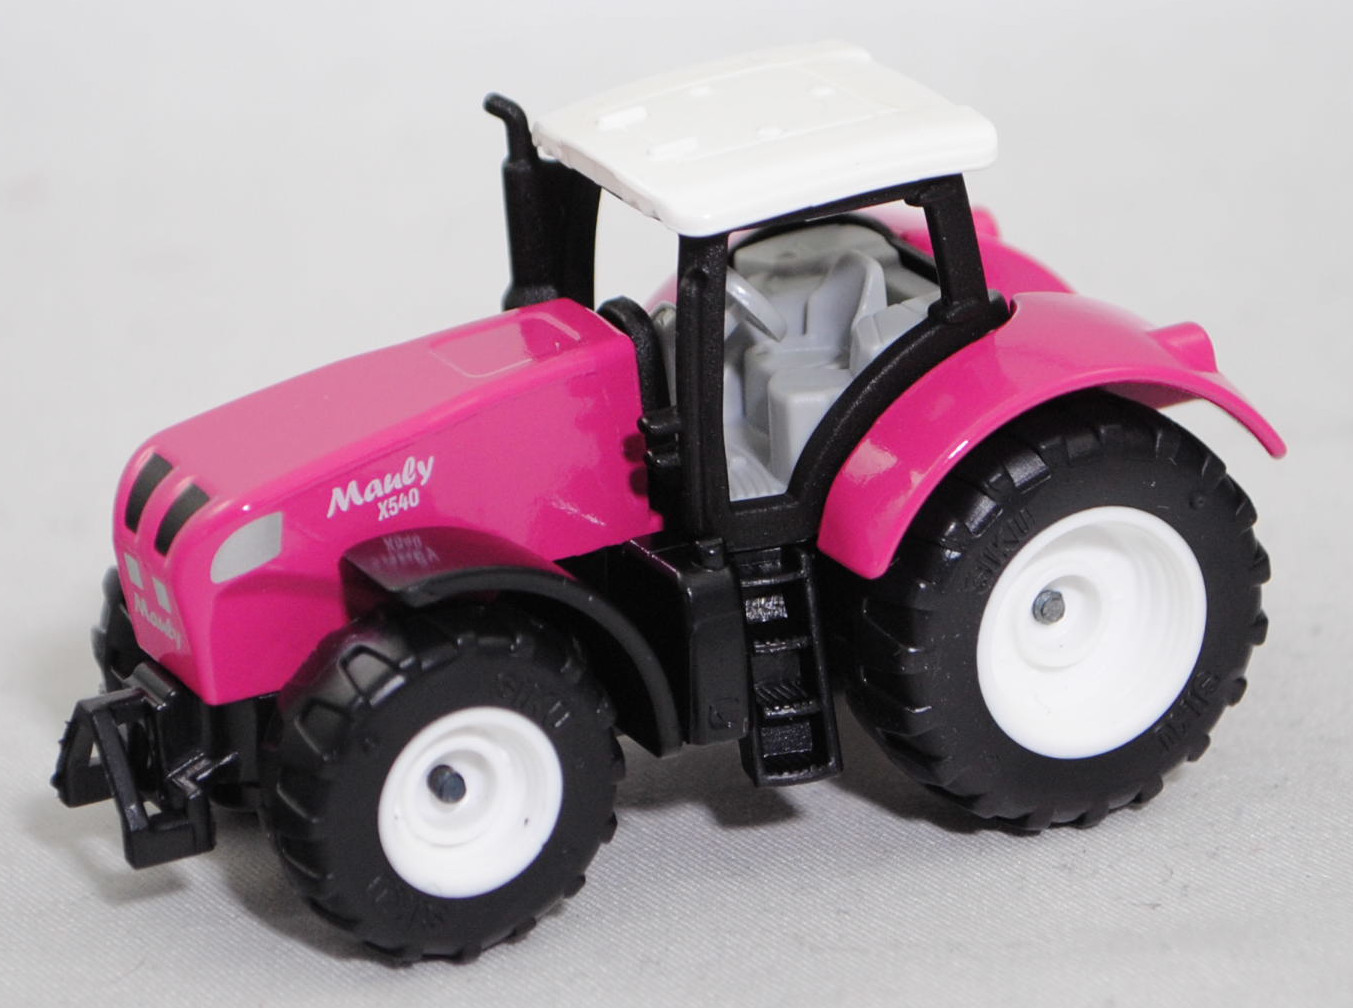 00001 Mauly X540 Traktor, dunkel-erikaviolett, Druck Mauly (7 mm breit) in silber vorne, SIKU, P29e